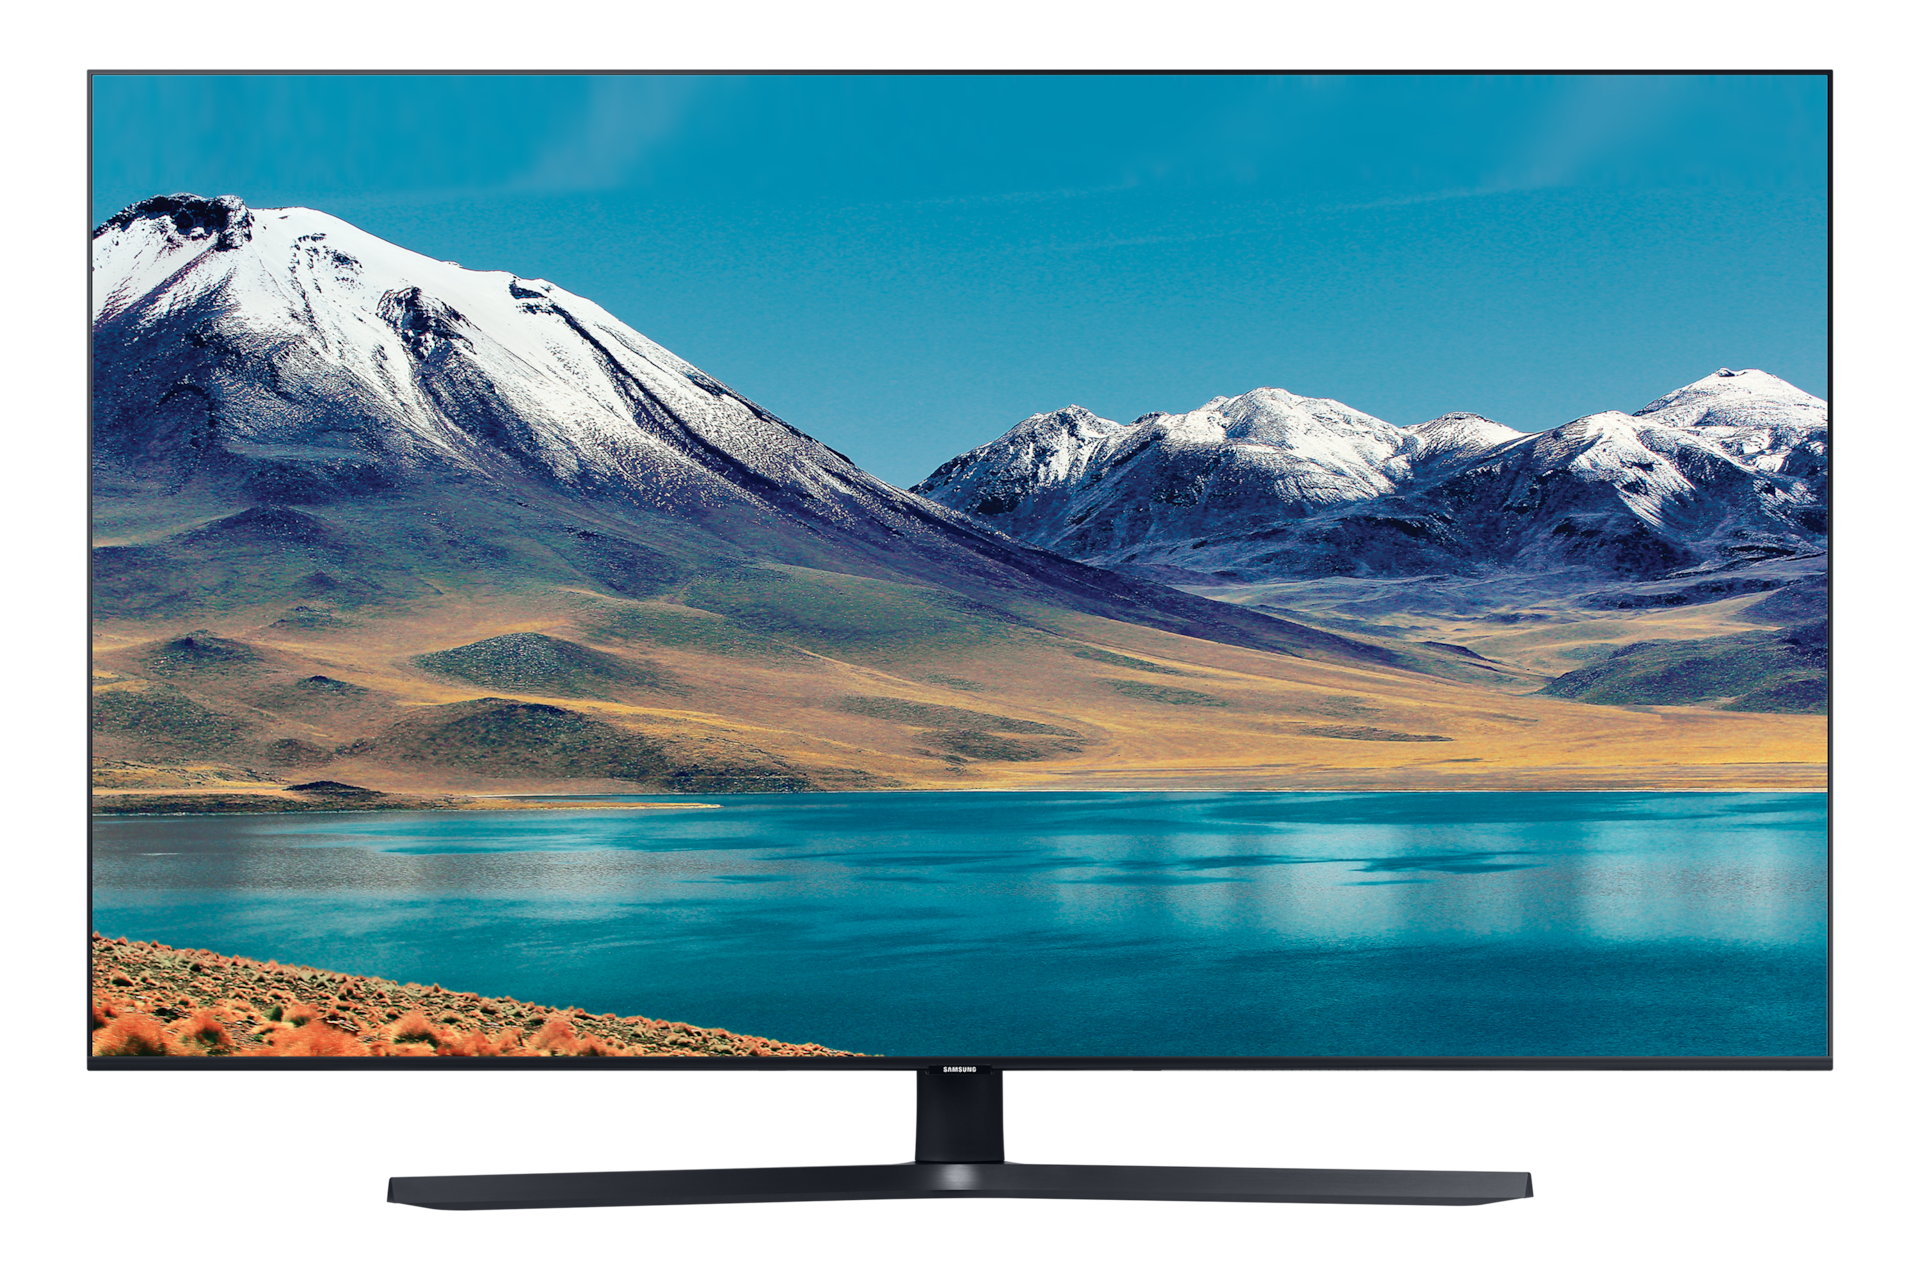 18++ Samsung 55 inch tu8500 4k uhd smart tv 2020 information